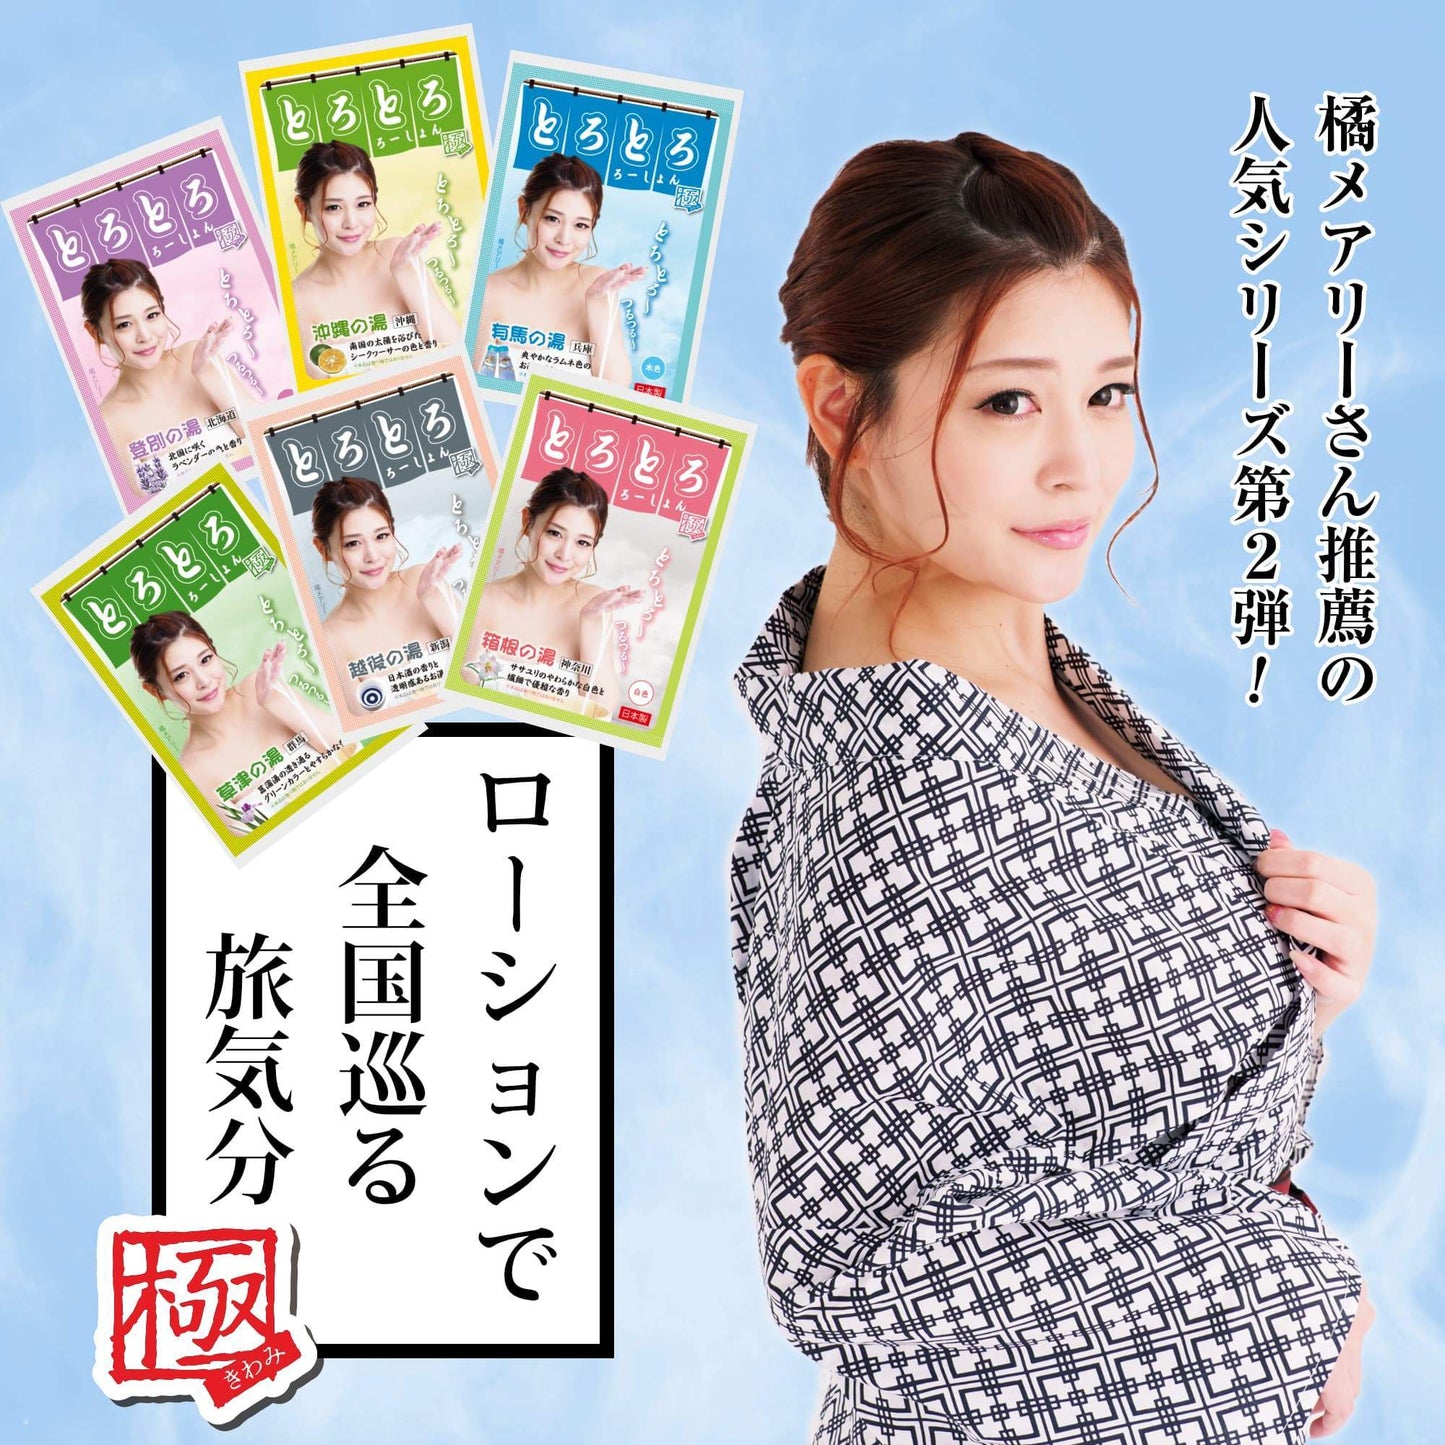 DNA JAPAN 【兵庫】Toro Toro 浴室用波子汽水味溫泉乳液 有馬の湯 極 沐浴用品 購買